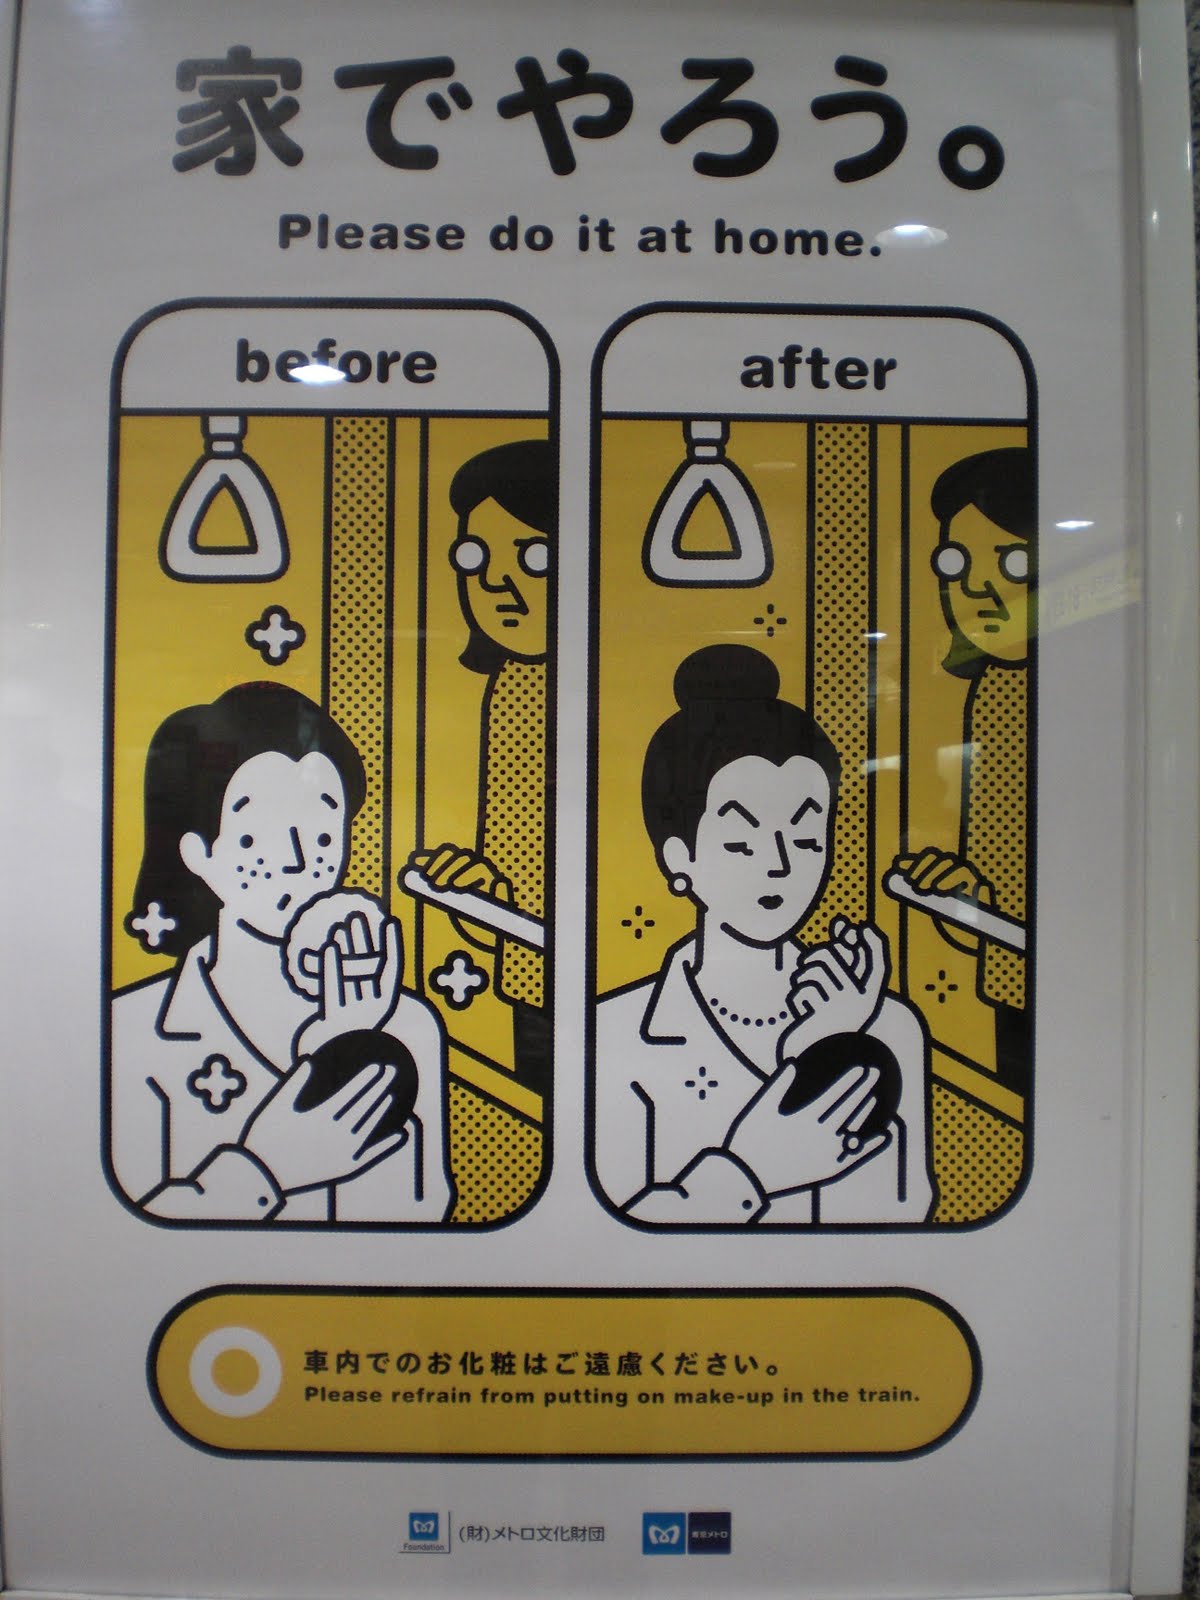 Aprendam a ter boas maneiras no Metrô de Tokyo! Blog+147